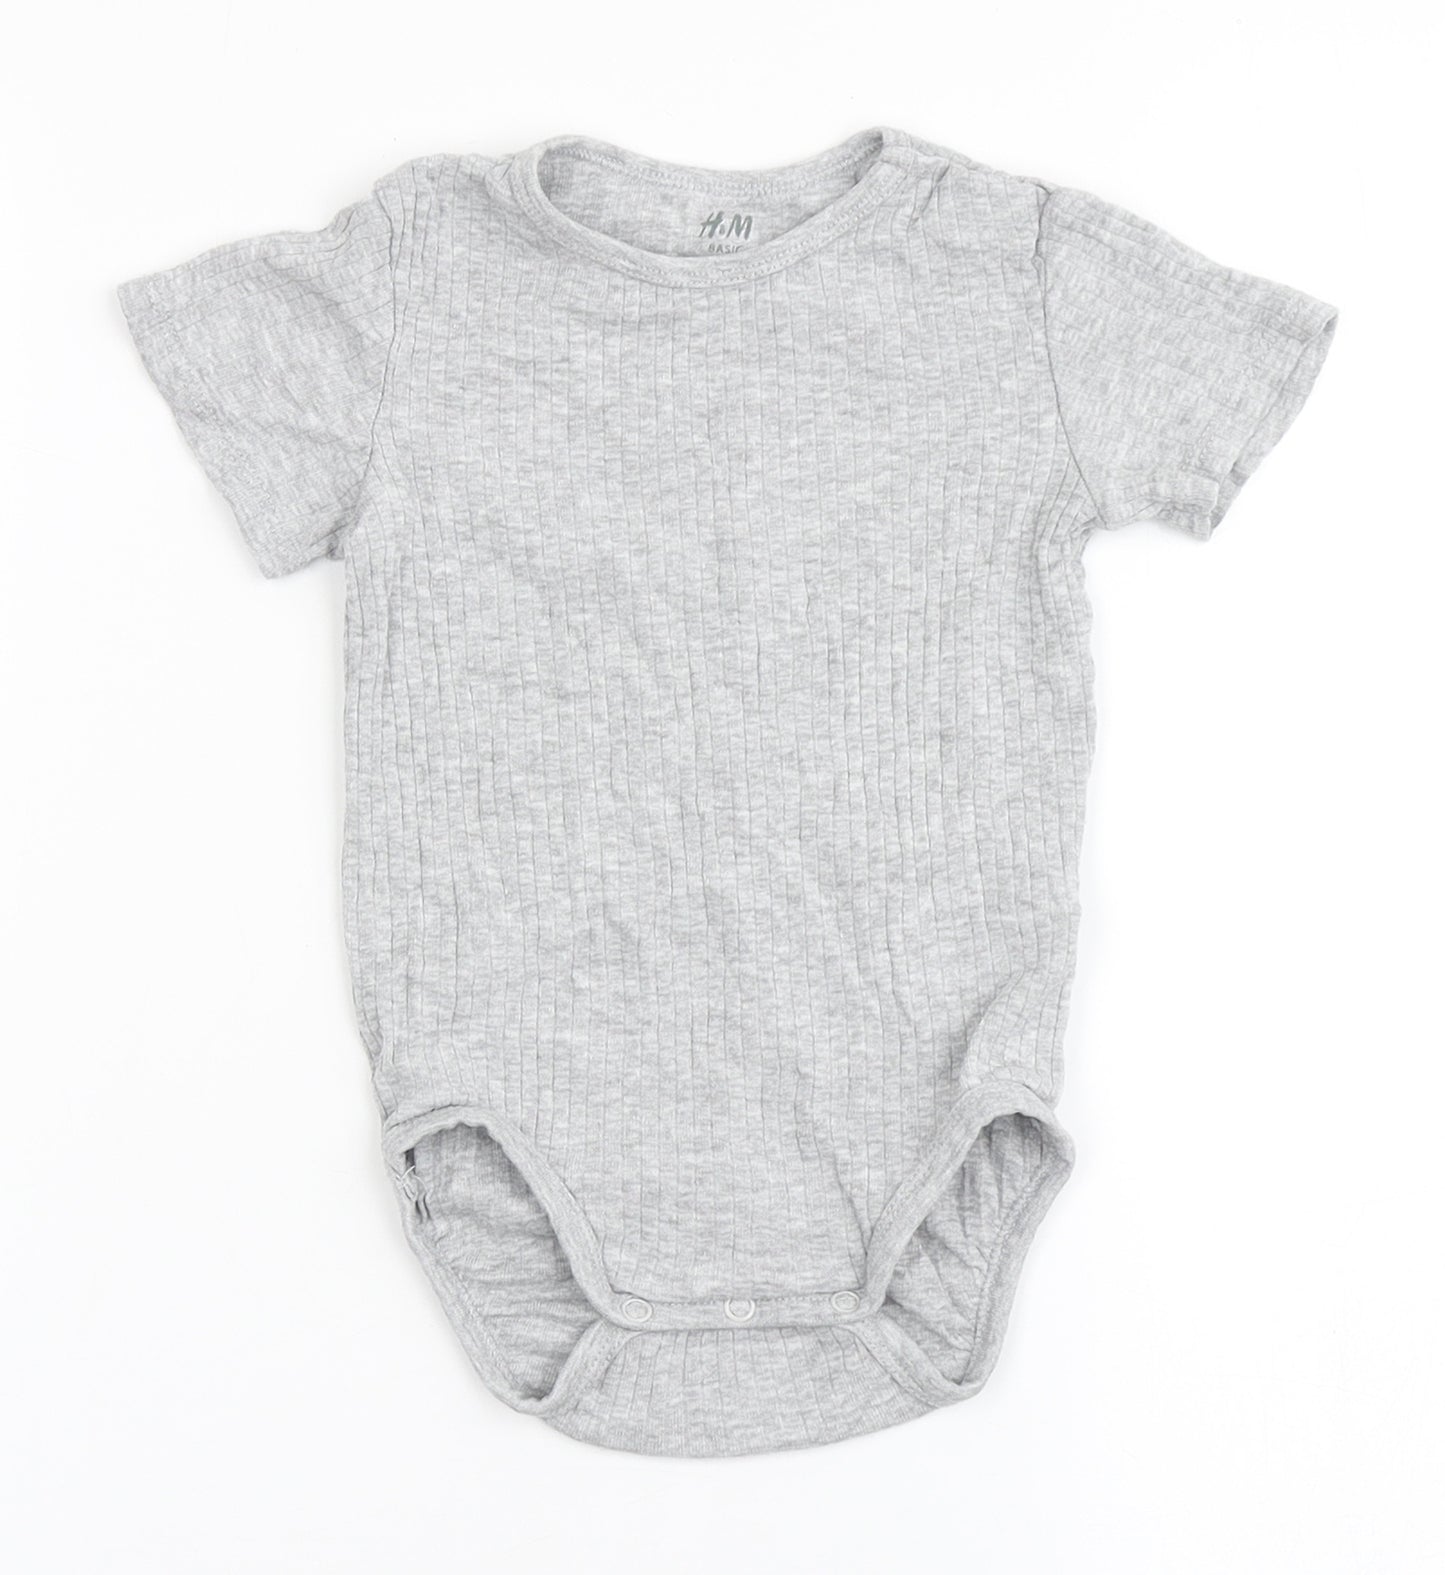 H&M Baby Grey  Cotton Babygrow One-Piece Size 12-18 Months  Snap